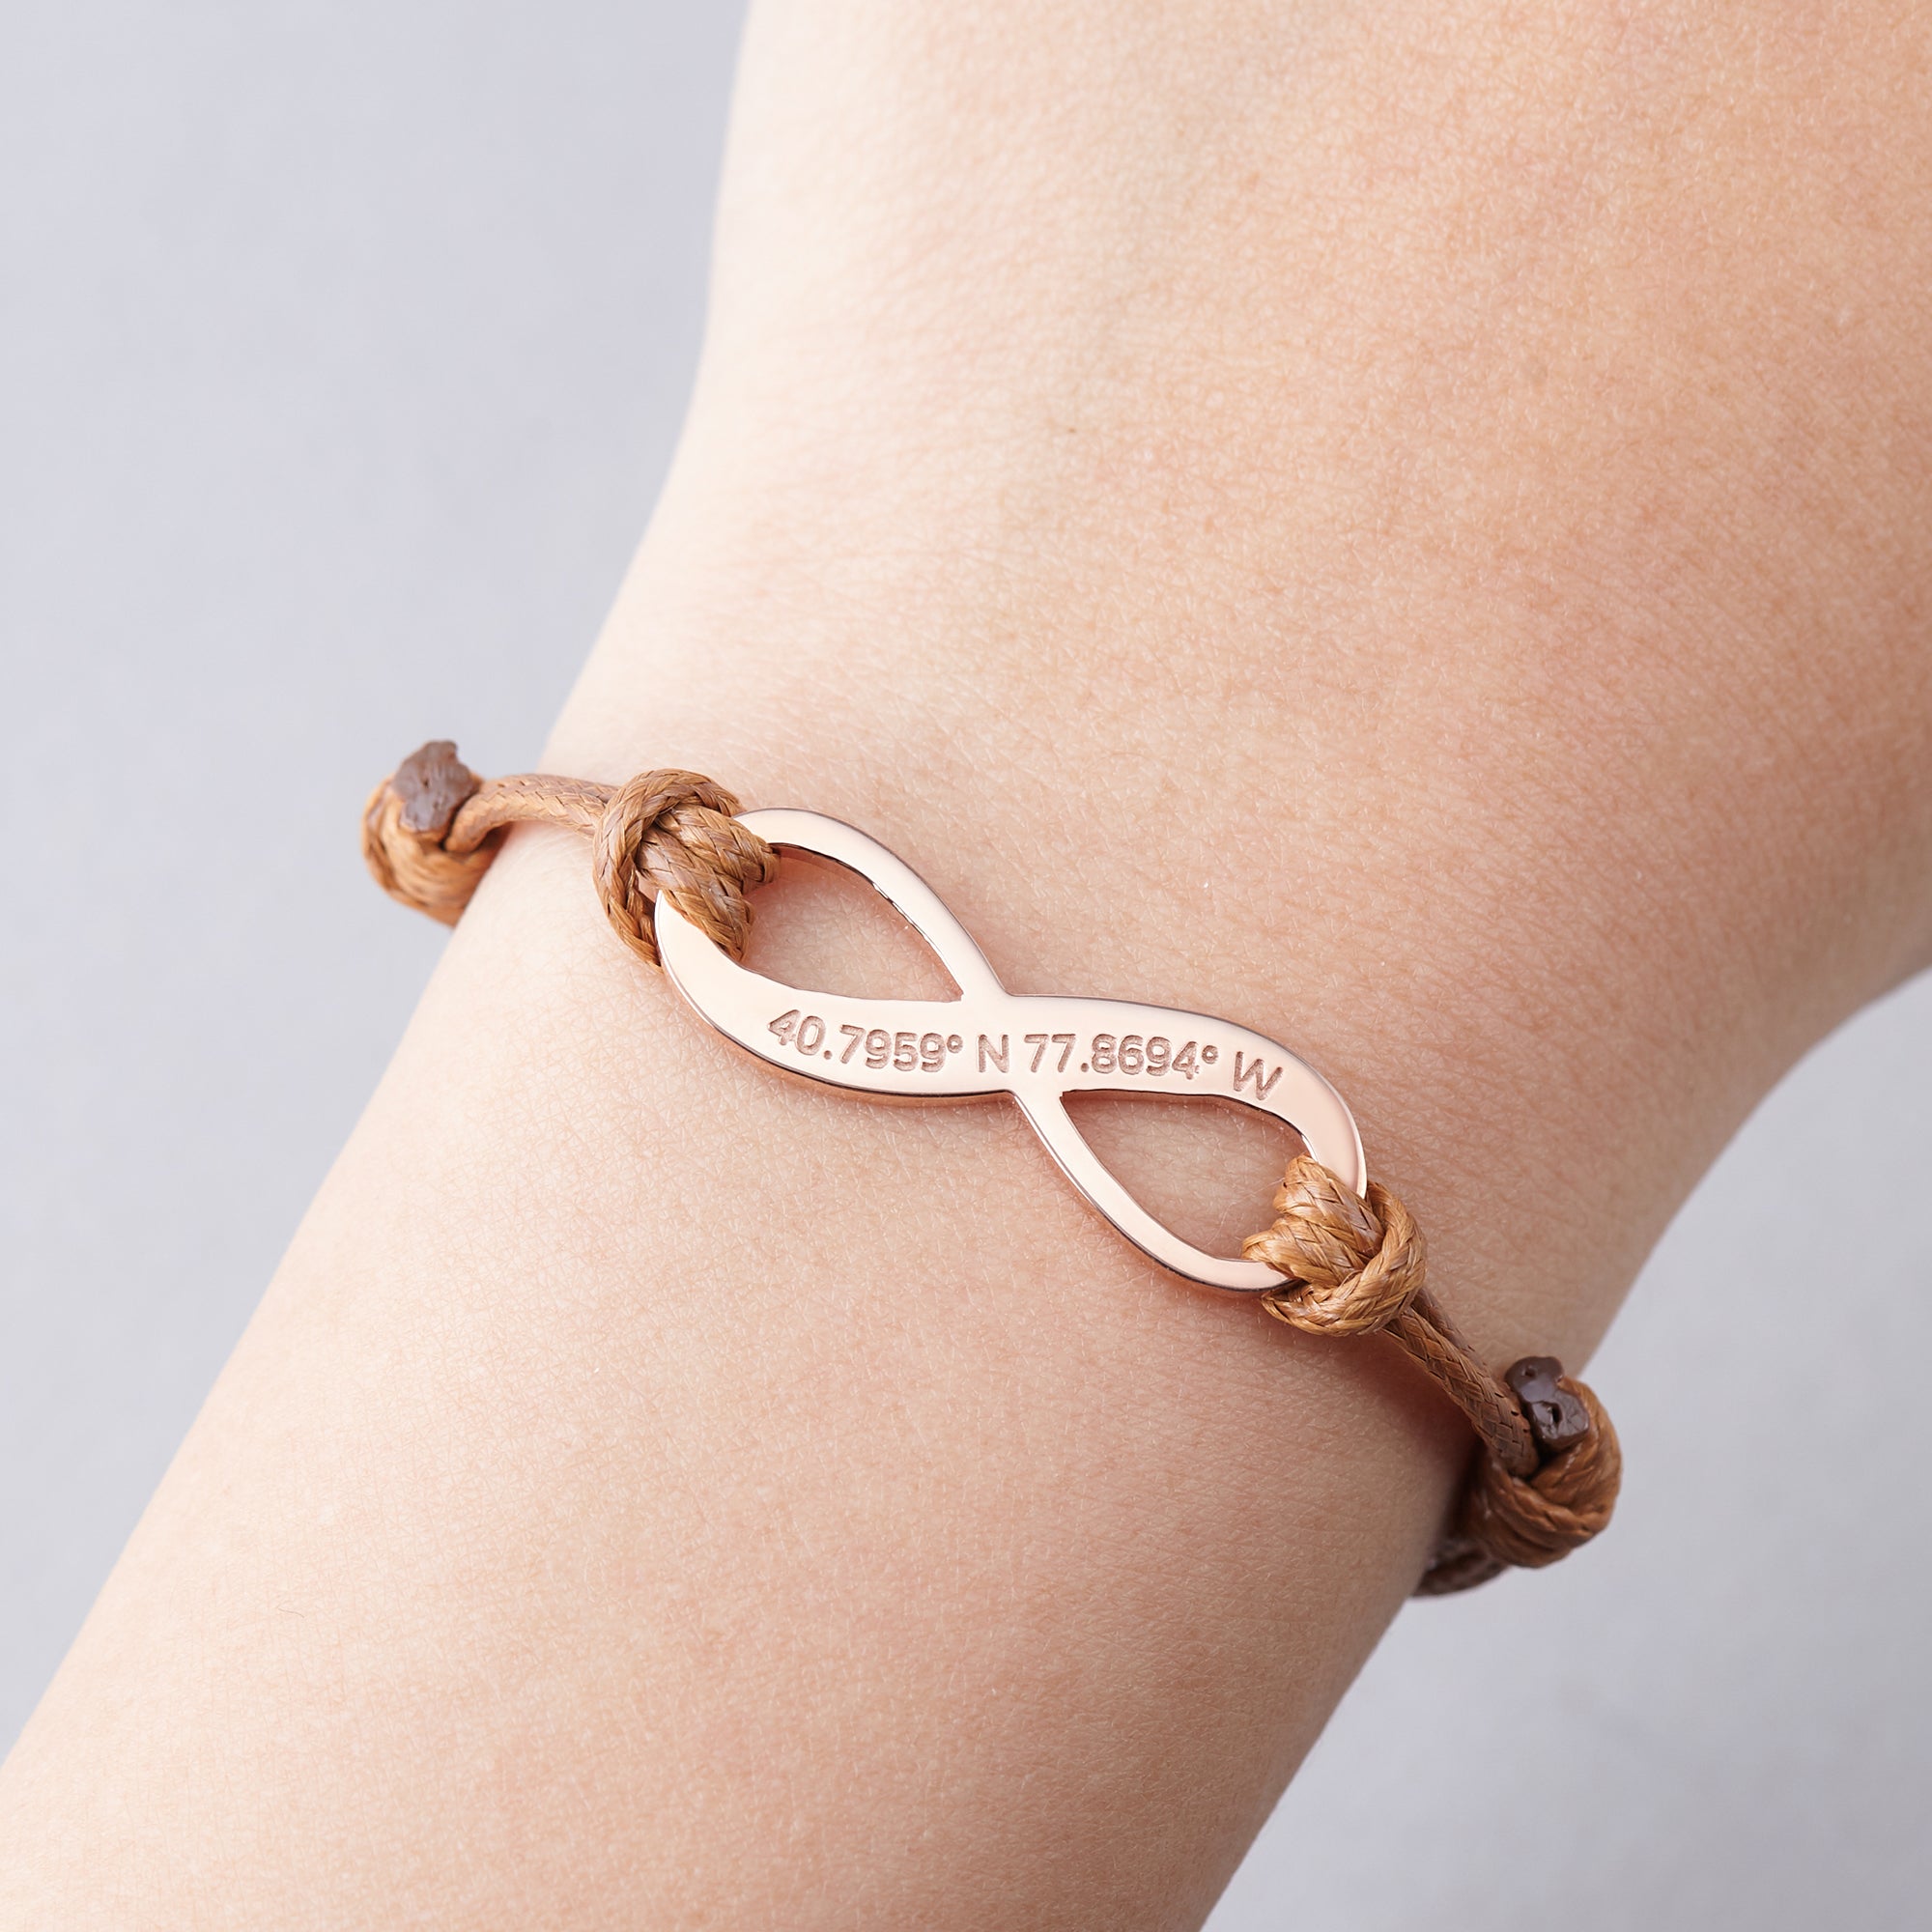 Adjustable Leather Coordinate Bracelet - Latitude Longitude Jewelry for Graduation or Moving Away Gift Bijou Her